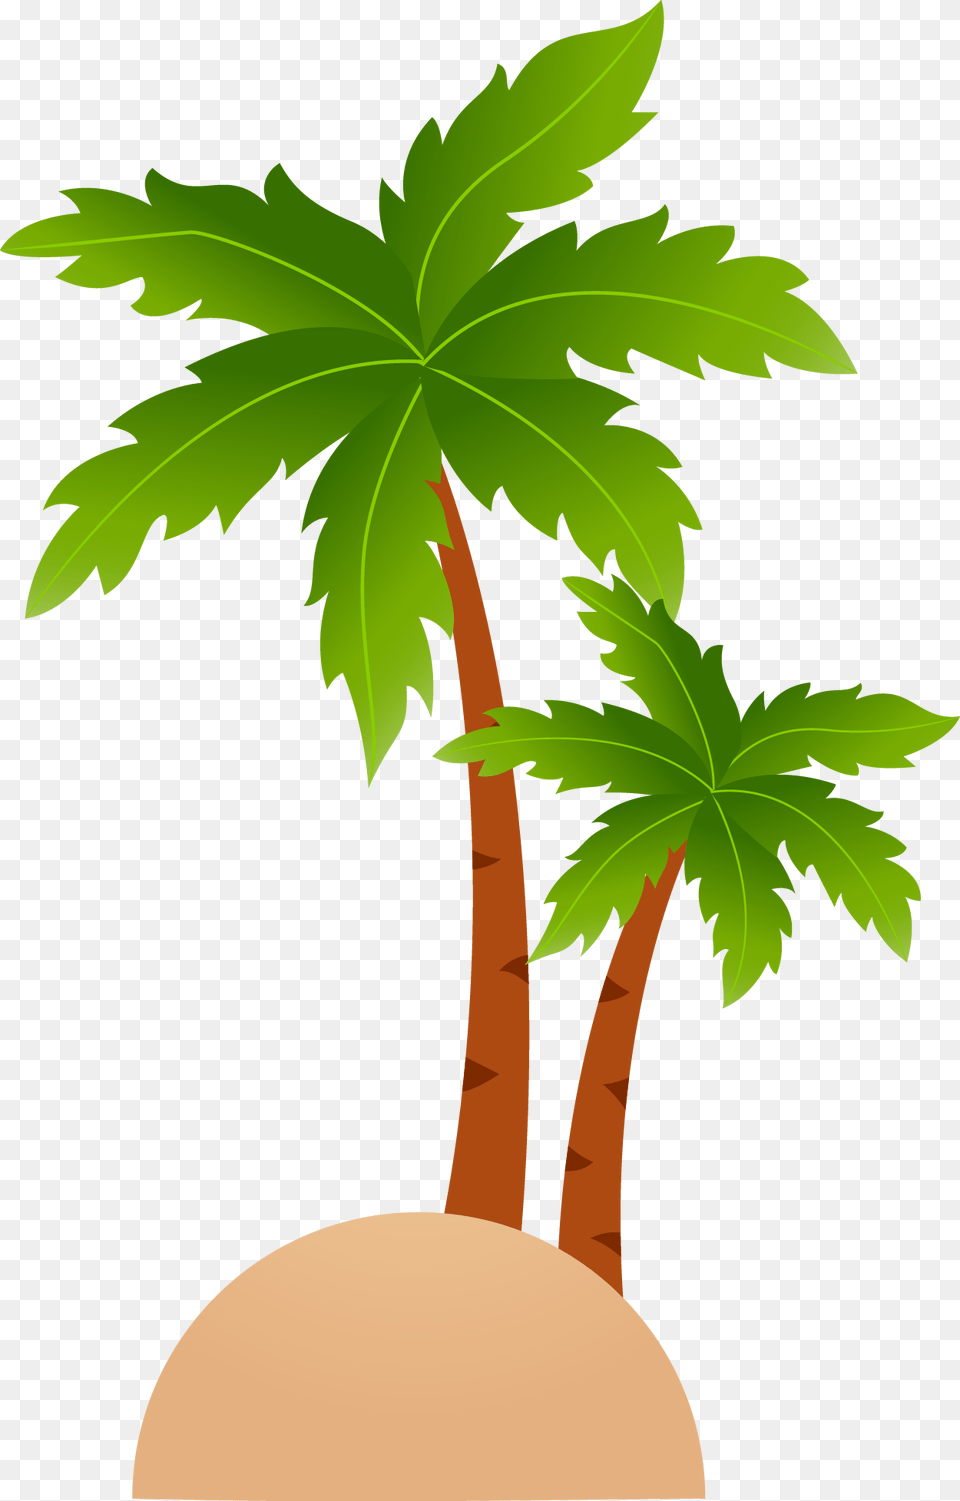 Tropical Islands Resort Cartoon Clip Art Clipart Leaf Coconut Tree, Palm Tree, Plant, Food, Produce Free Transparent Png